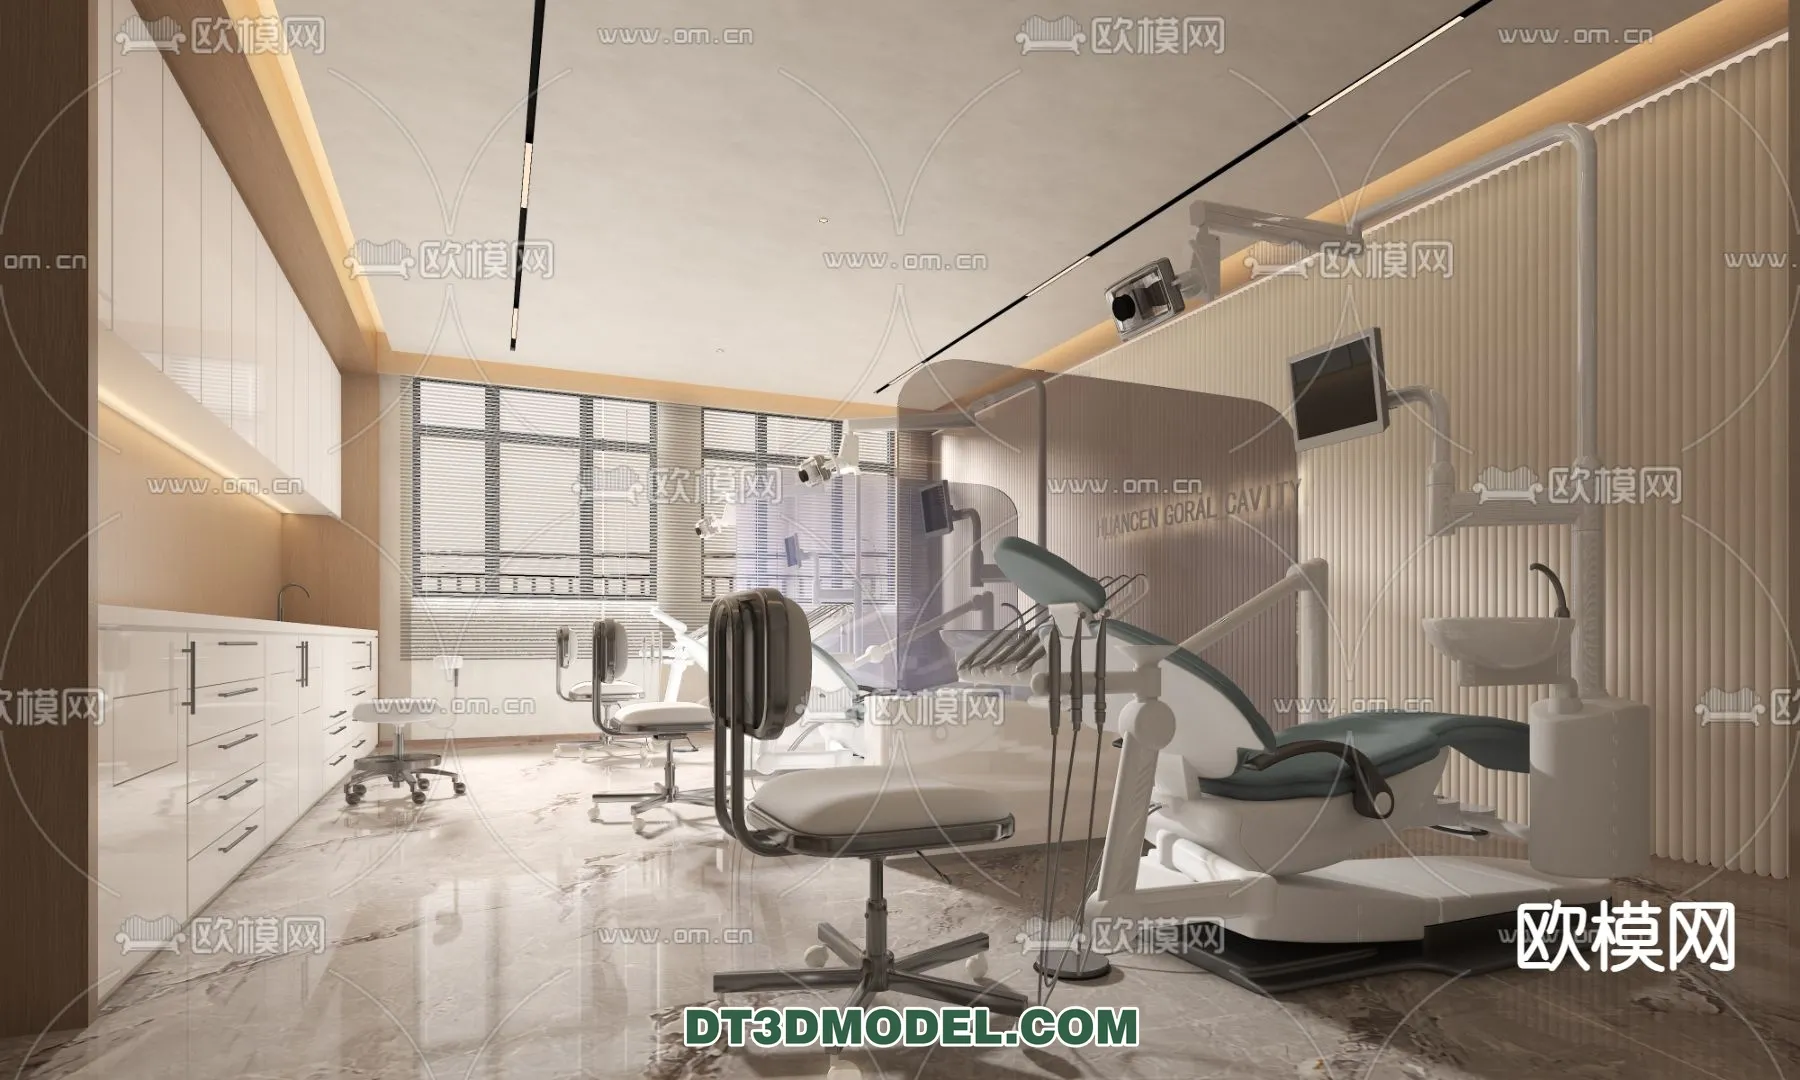 HOSPITAL 3D SCENES – MODERN – 0174